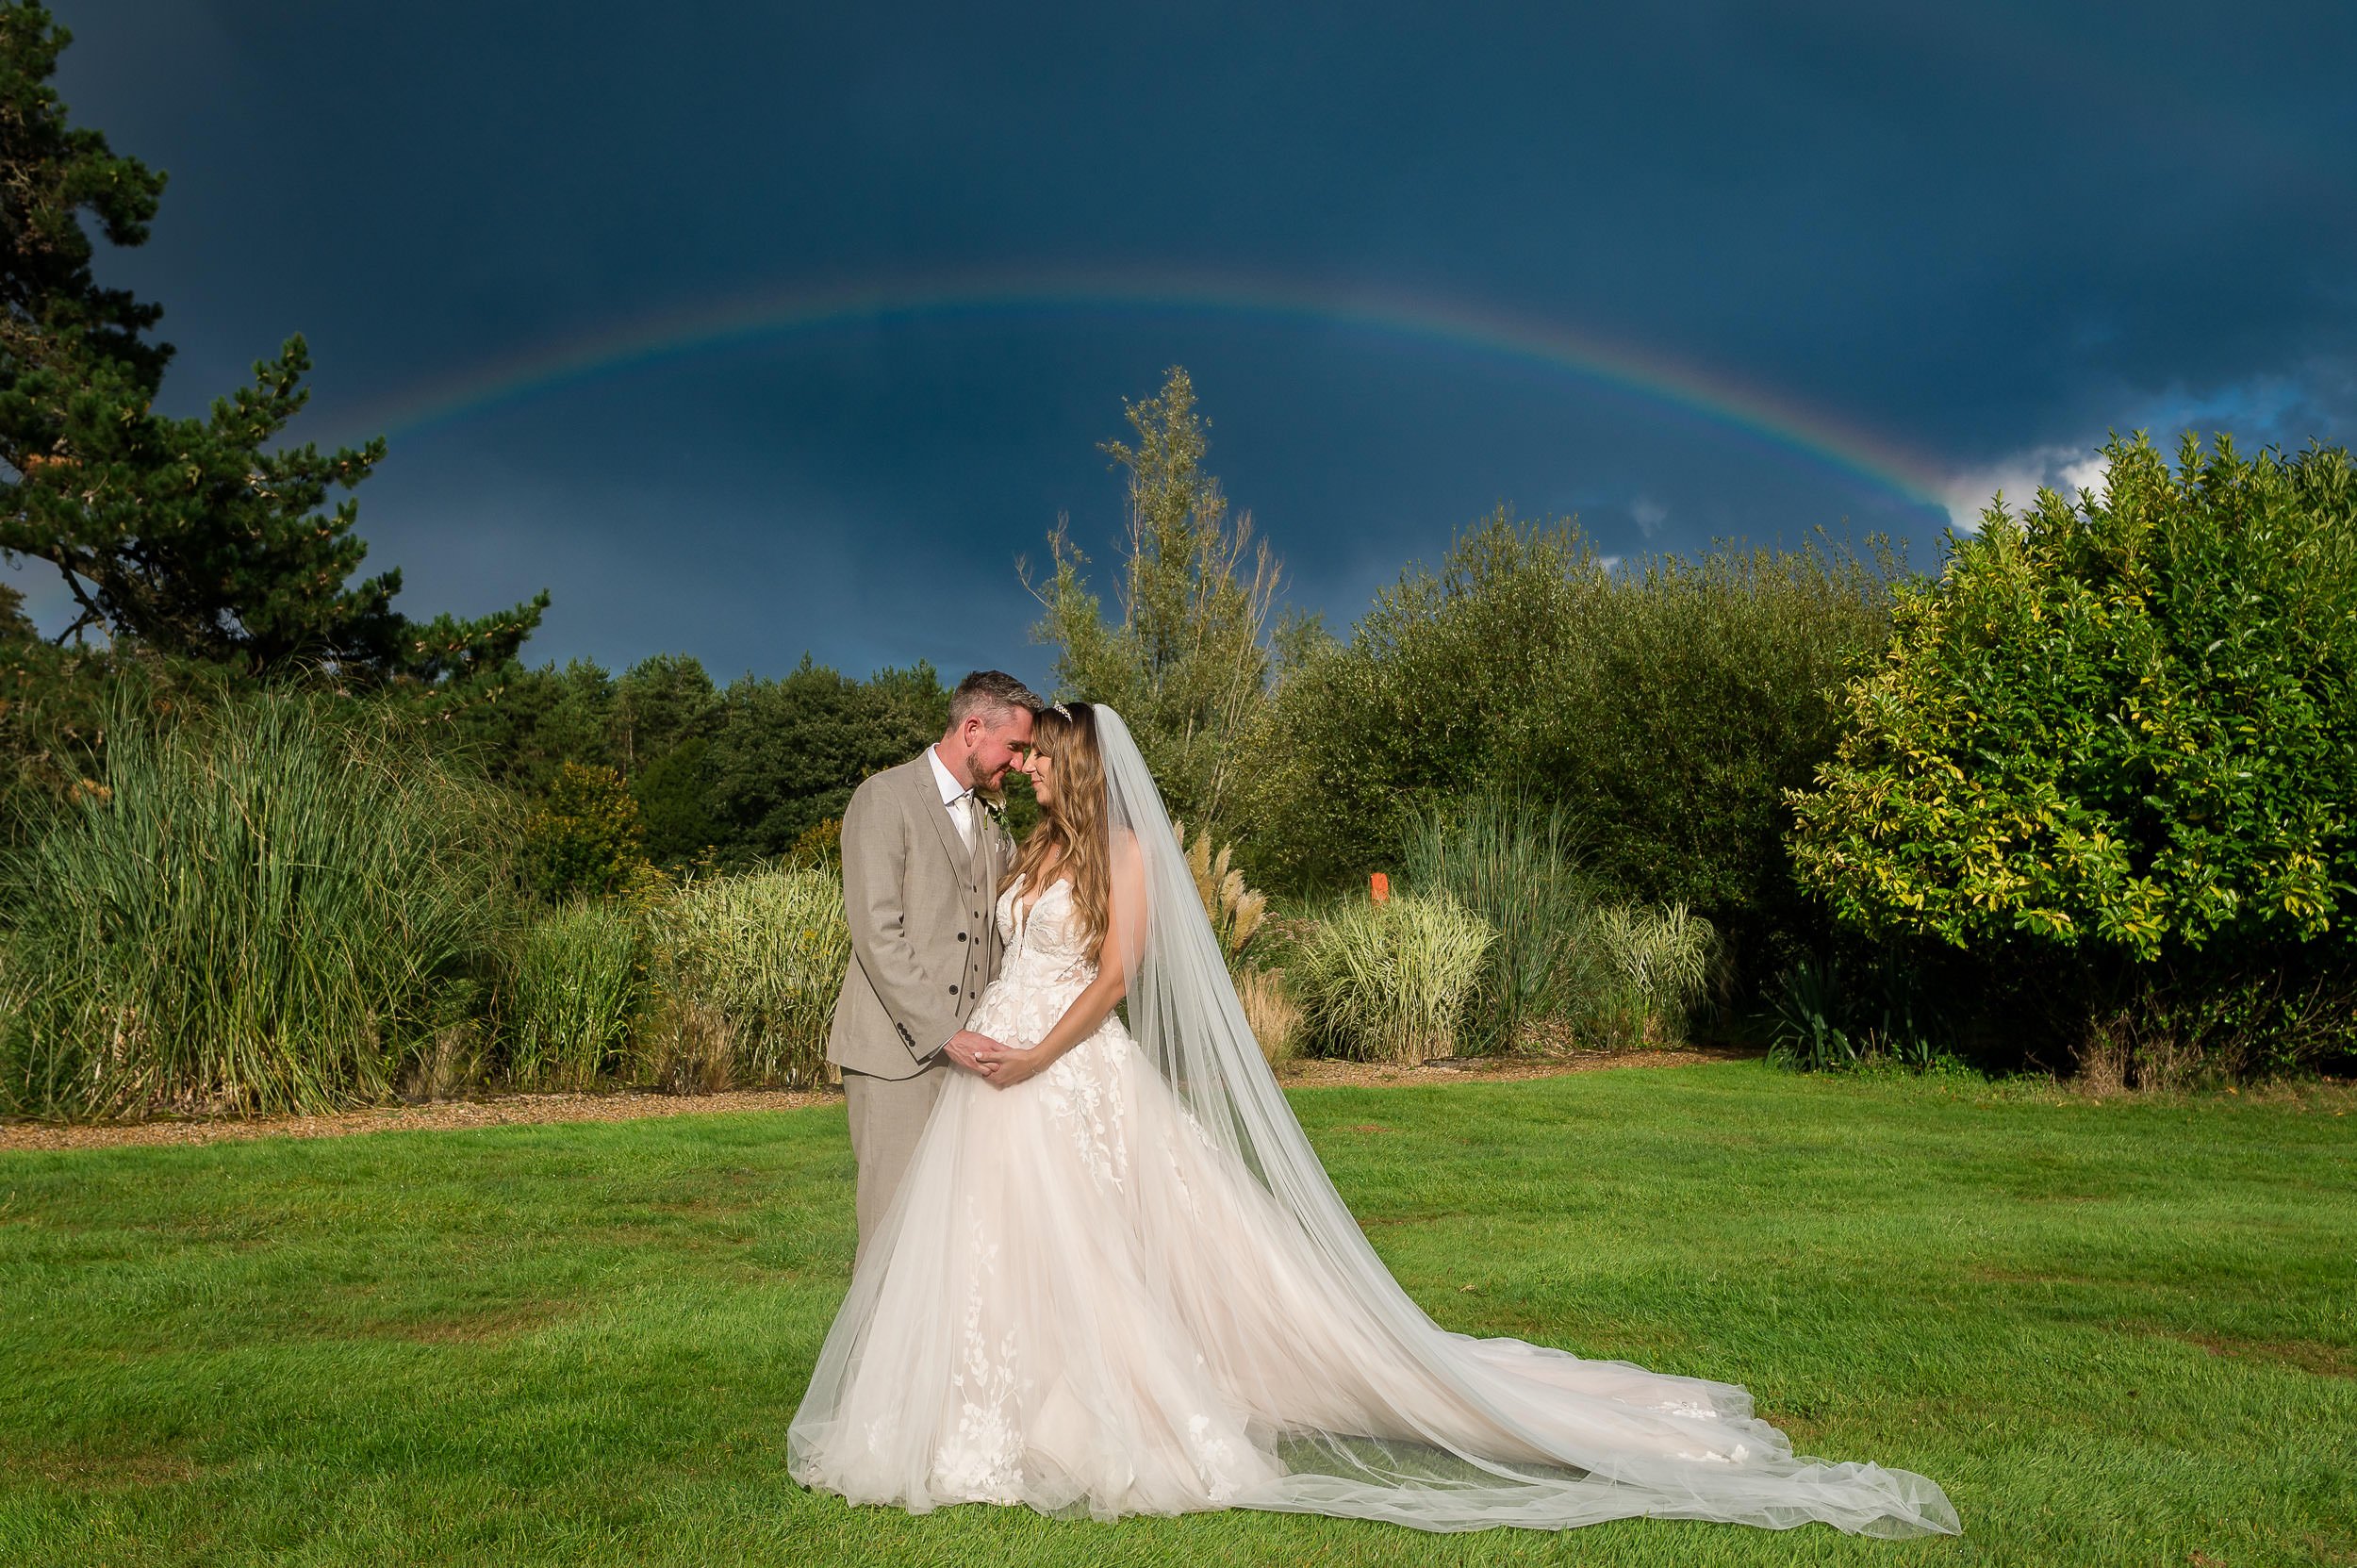 Rainbow over the bride and groom at Hethfelton House wedding